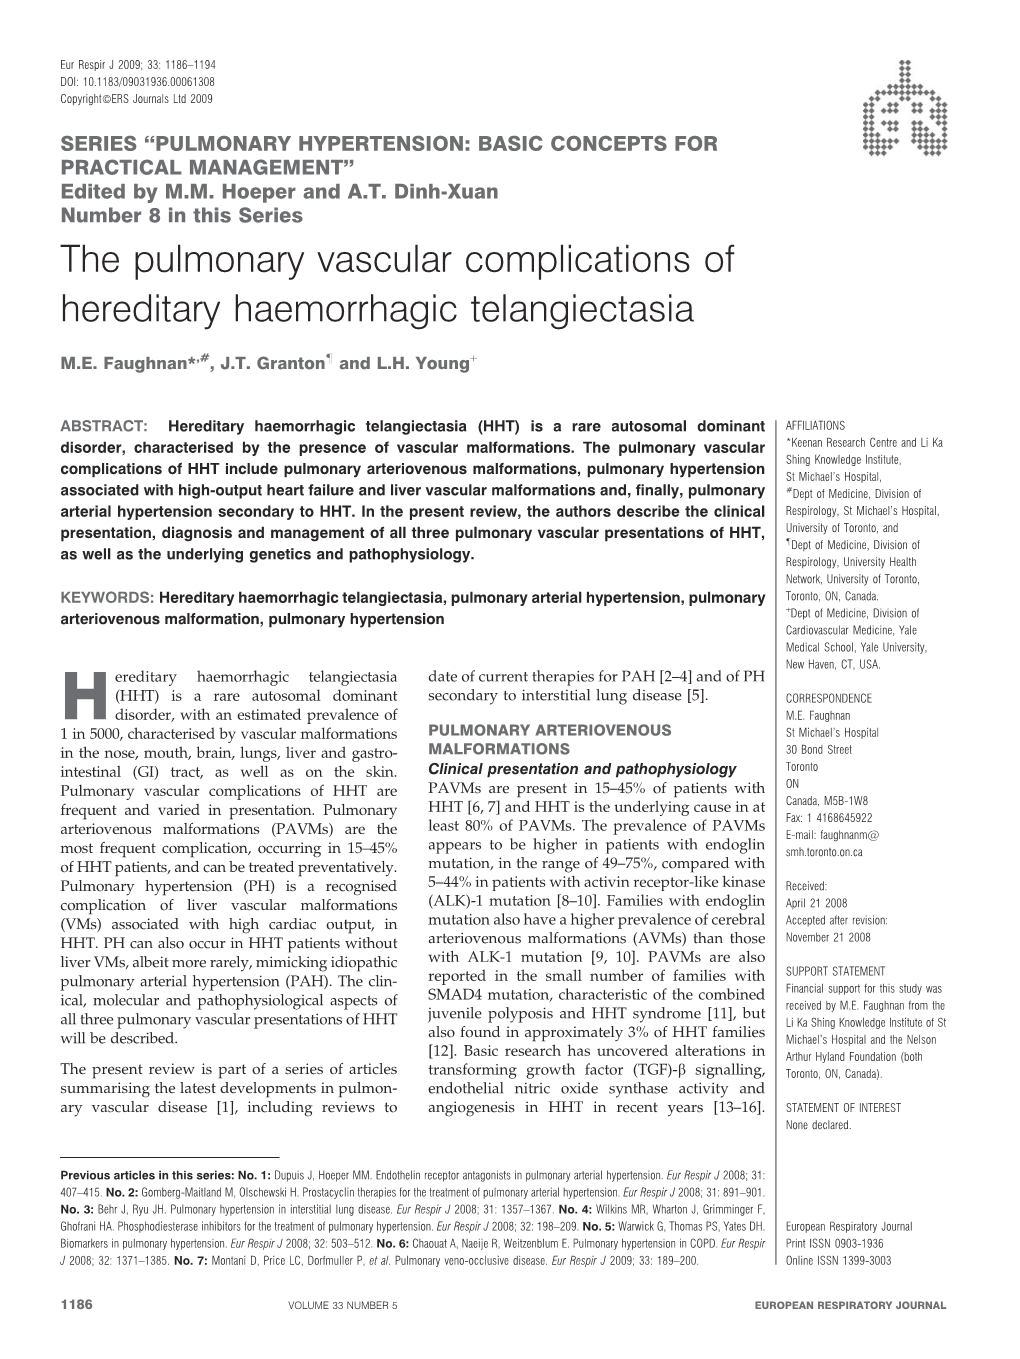 The Pulmonary Vascular Complications of Hereditary Haemorrhagic Telangiectasia